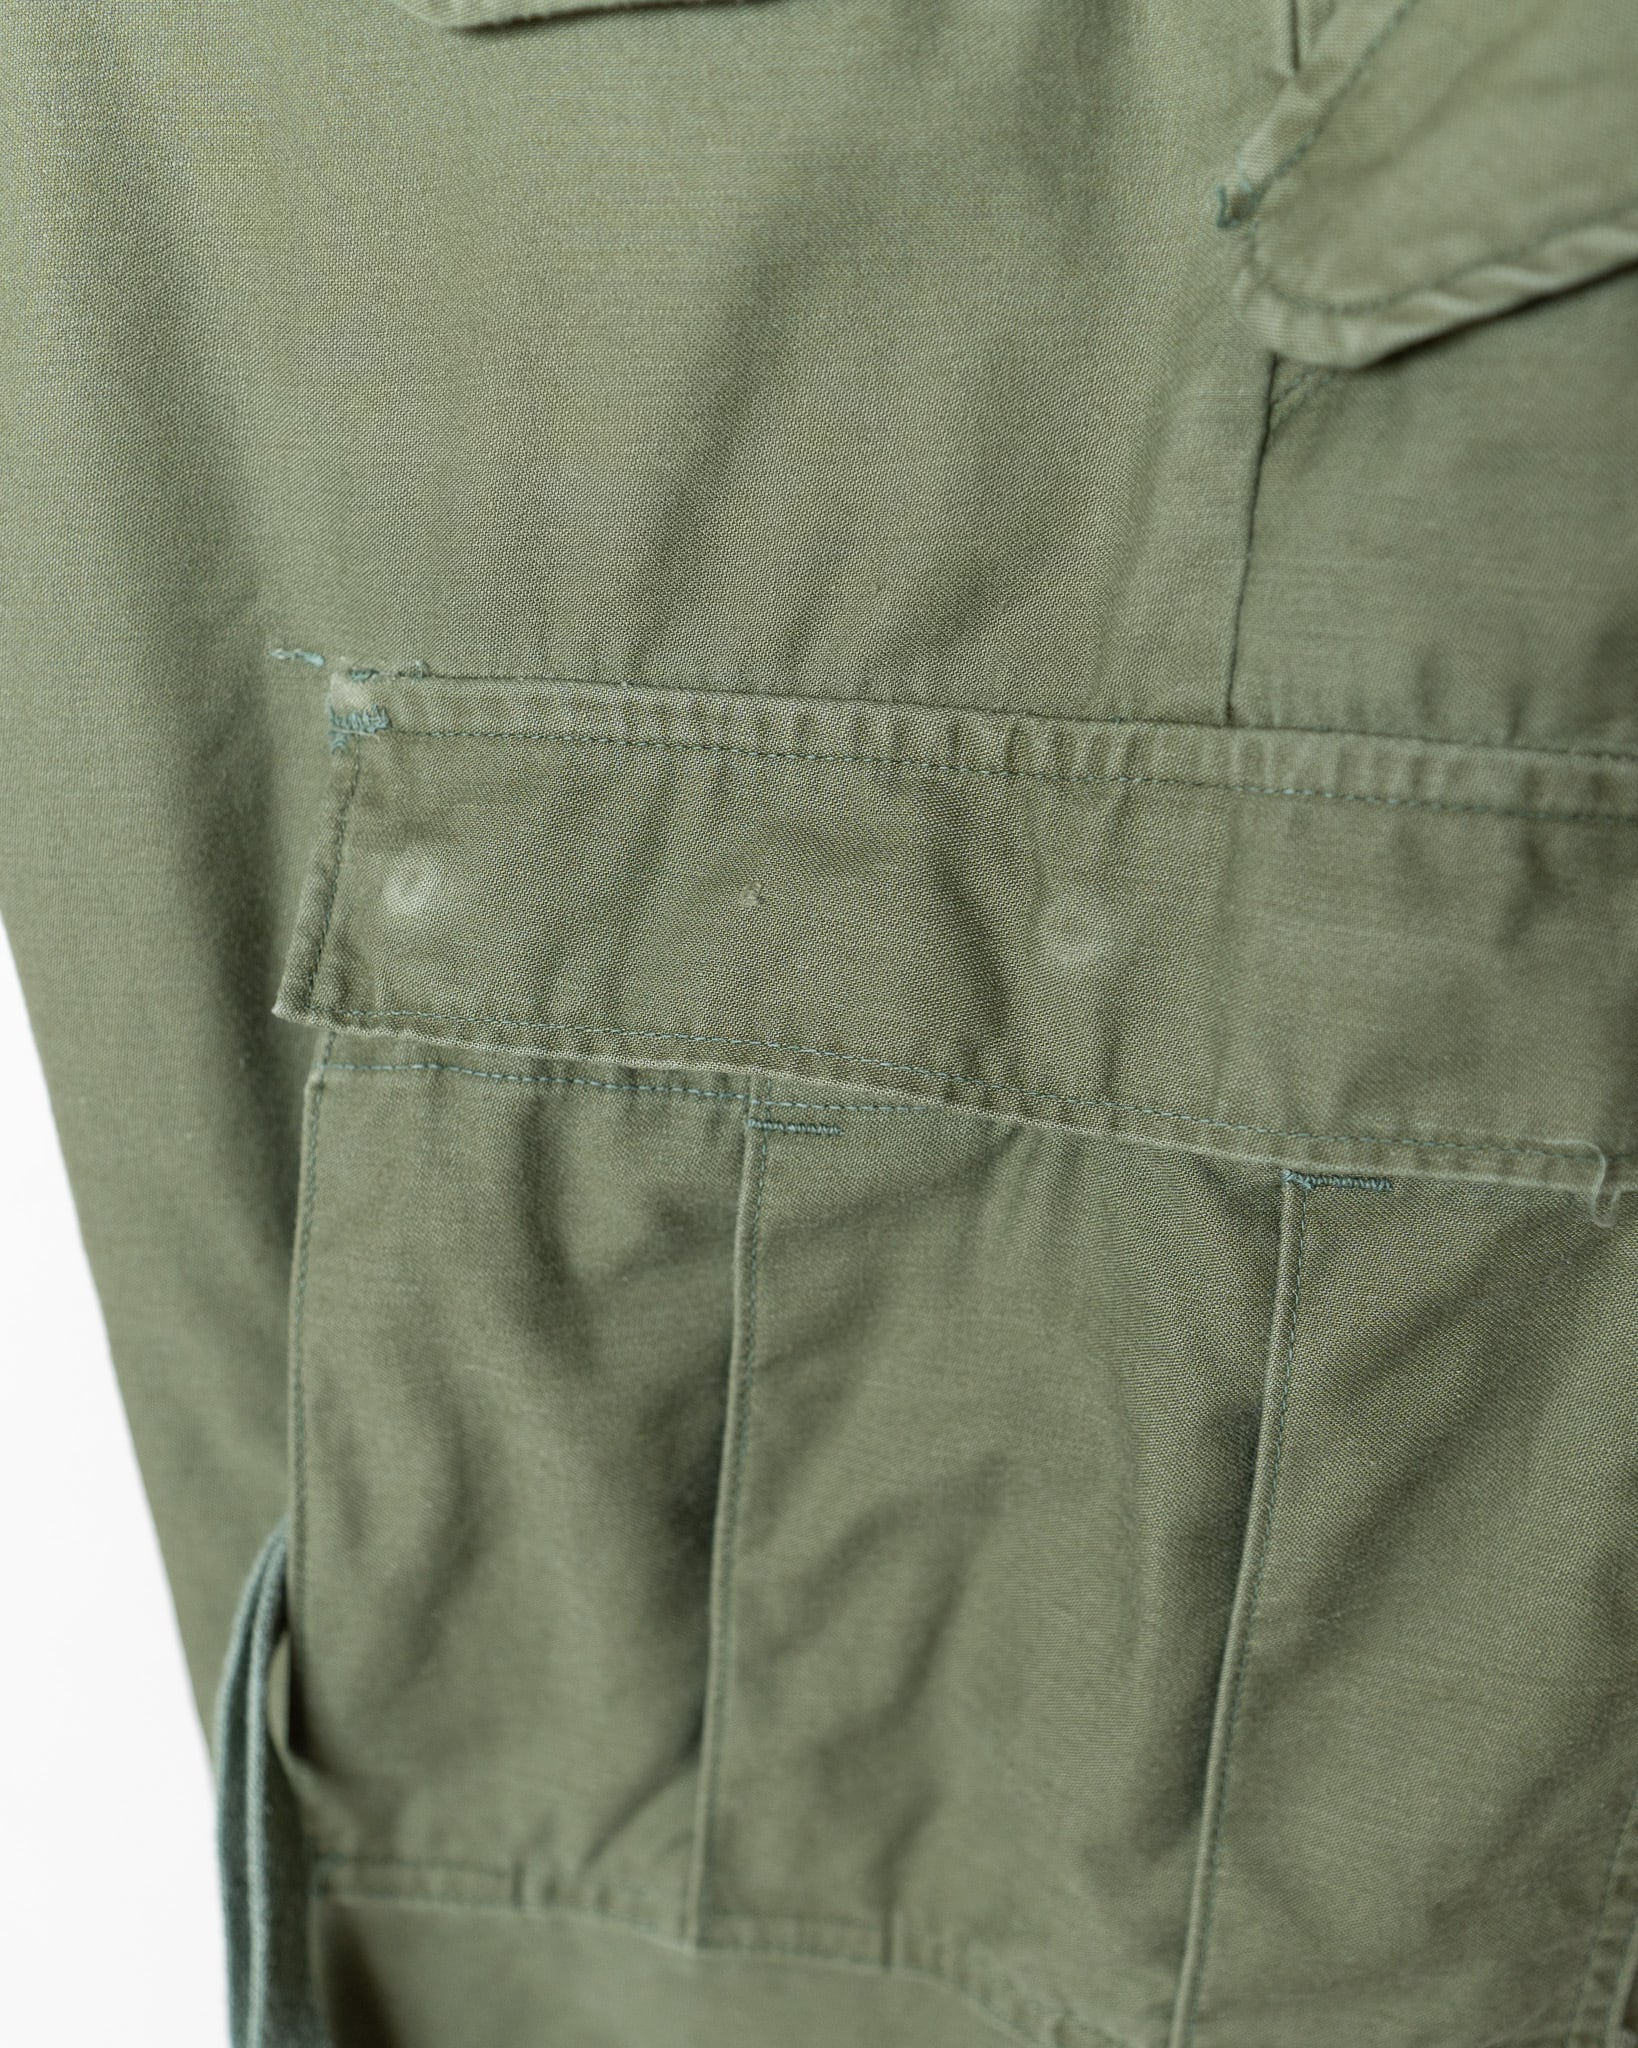 S SU.S.Army M Field Trousers Aluminum Zipper "Used" 初期型